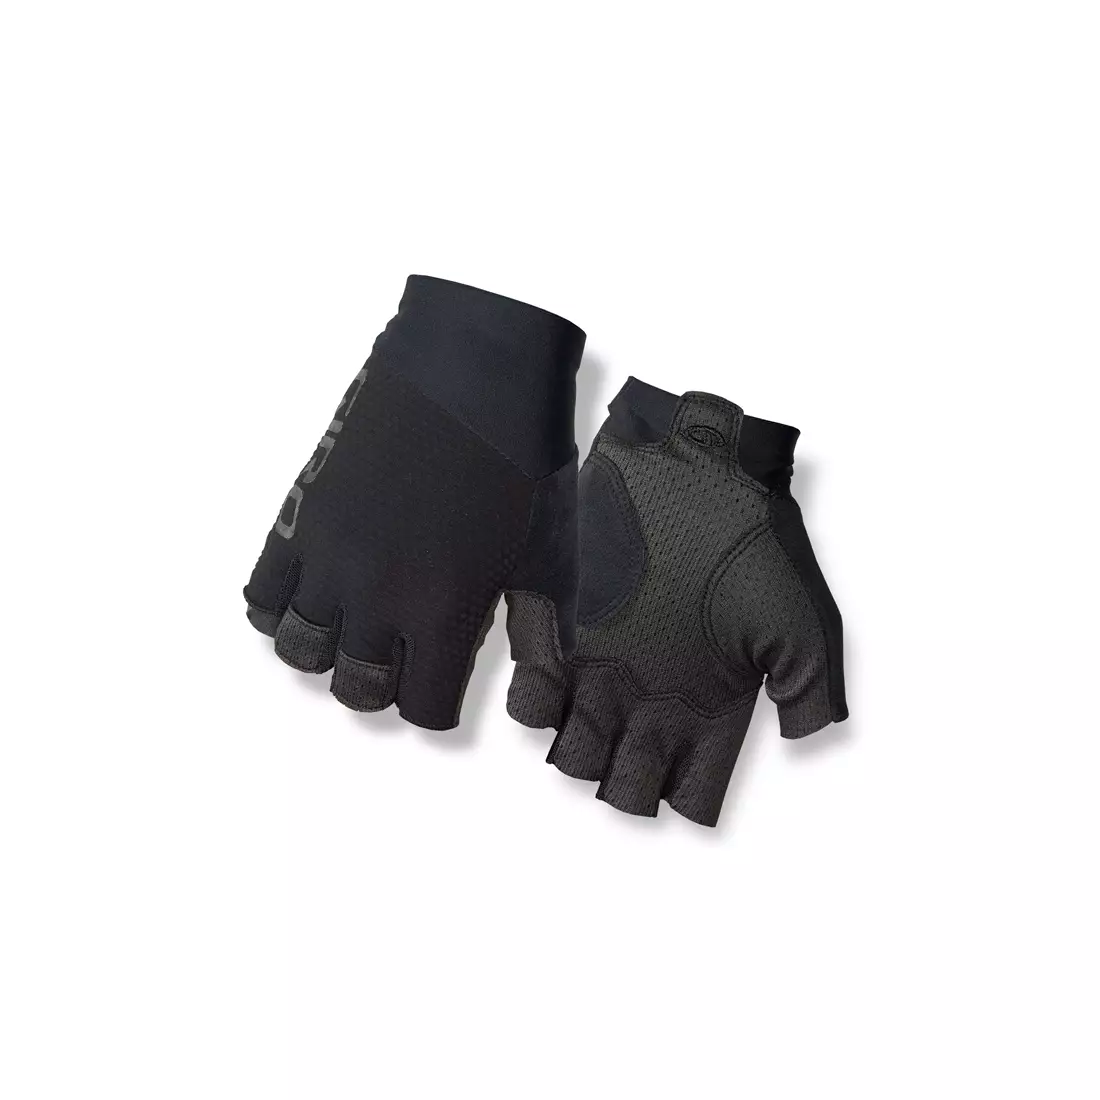 GIRO ZERO CS cycling gloves, black